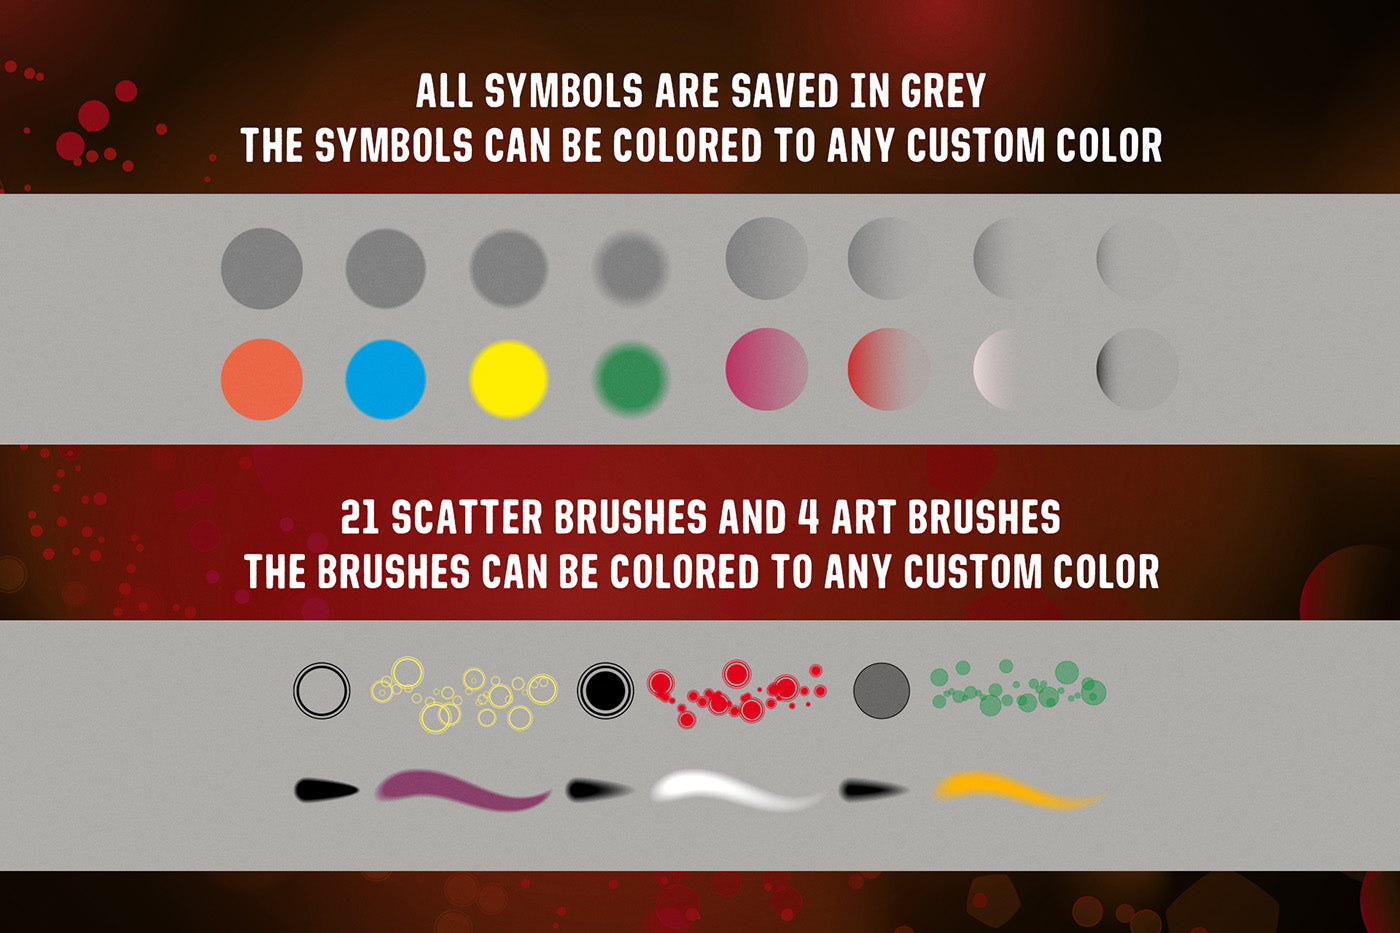 Bokeh Brushes and Symbols for Adobe Illustrator